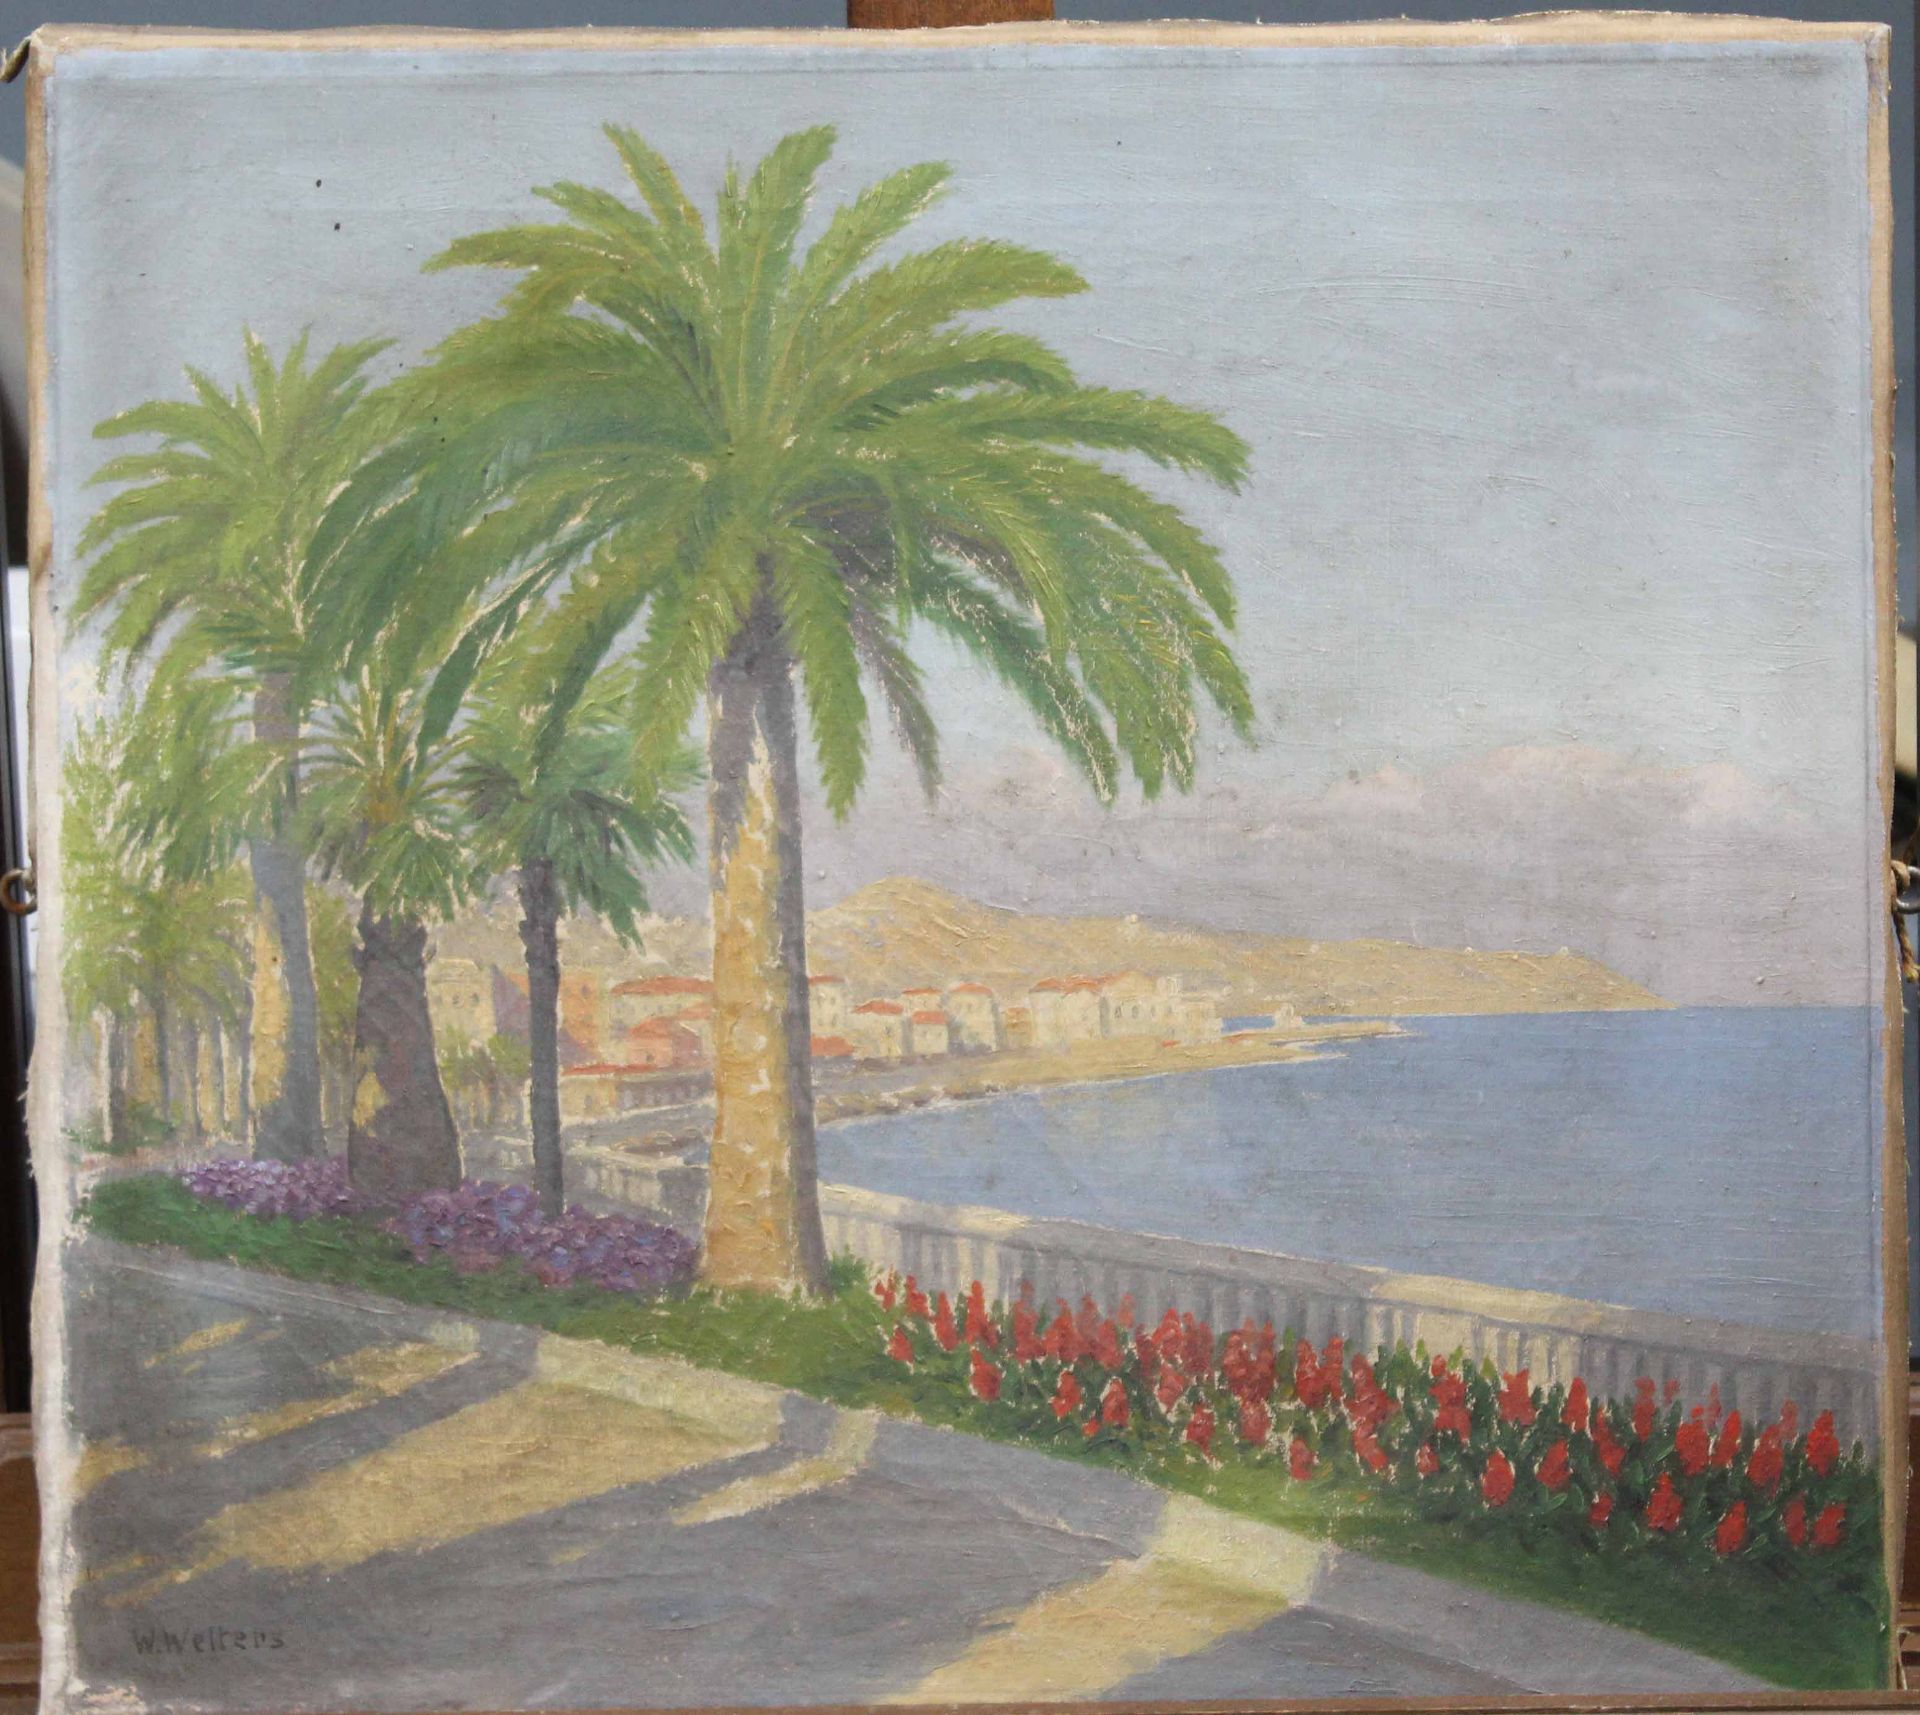 Willem WELTERS (1881 - 1972). Coast, probably Mediterranean.